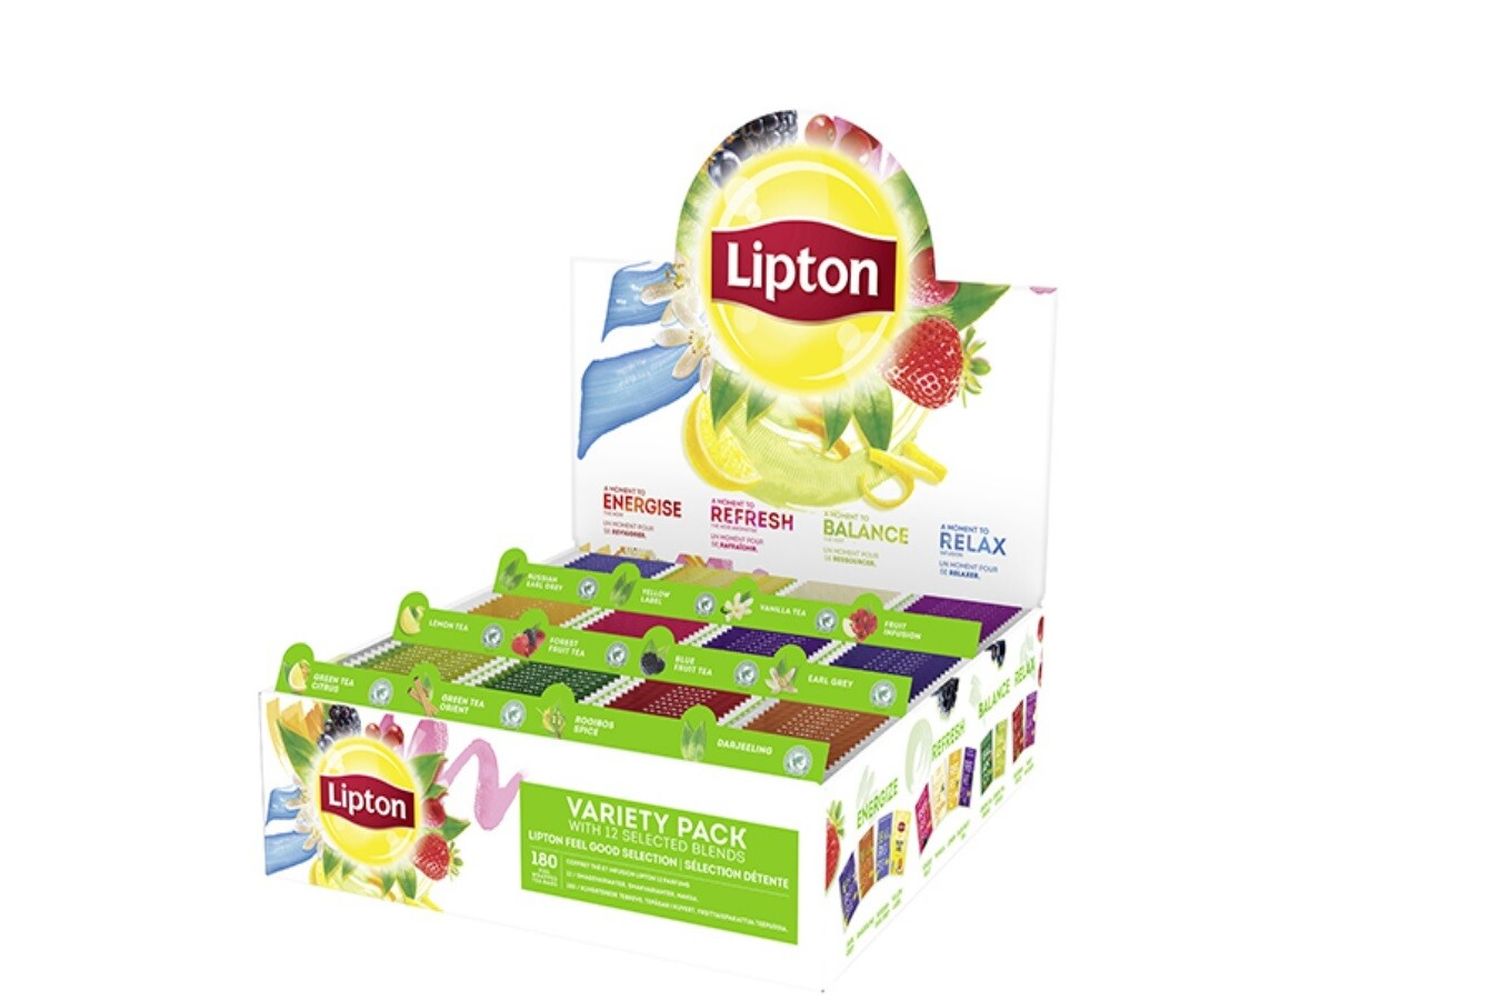 Coffret Thé Lipton Premium 1pc - Nevejan